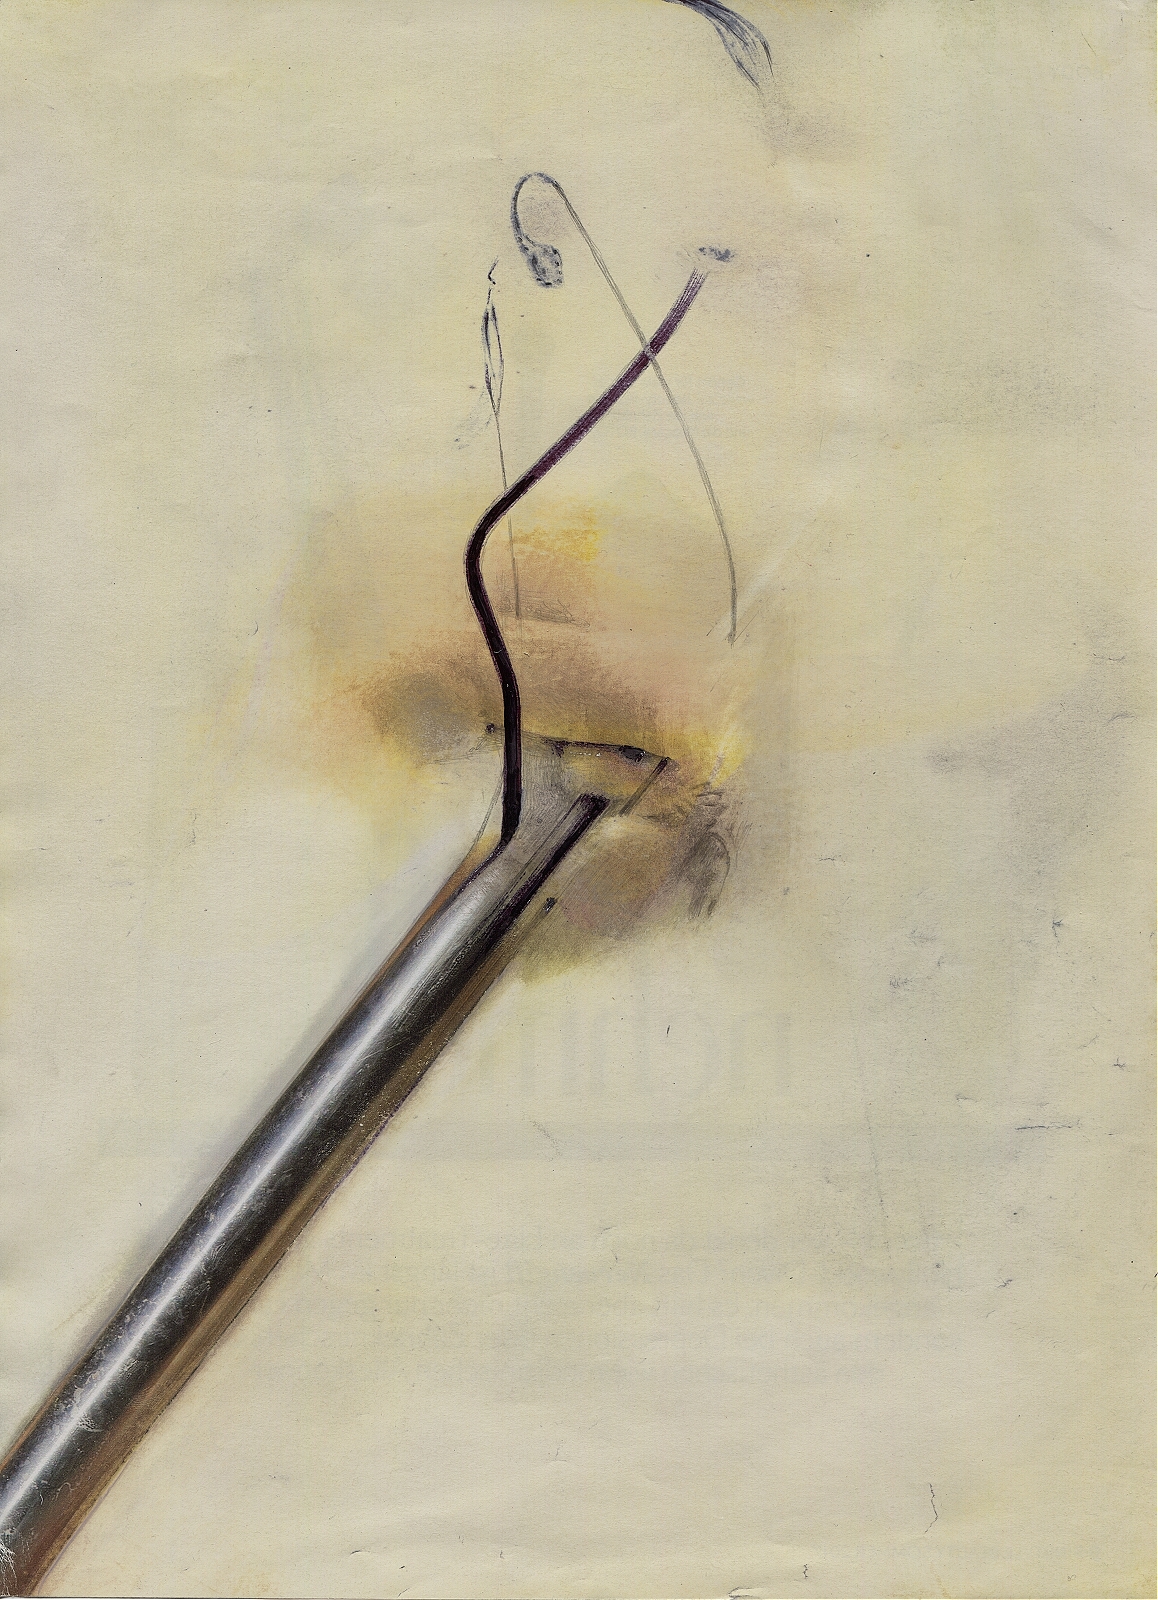 "Story without Story", 2019, lavender-oil, pencil, feltpen on magazine page,19.8 x 27.5 cm
